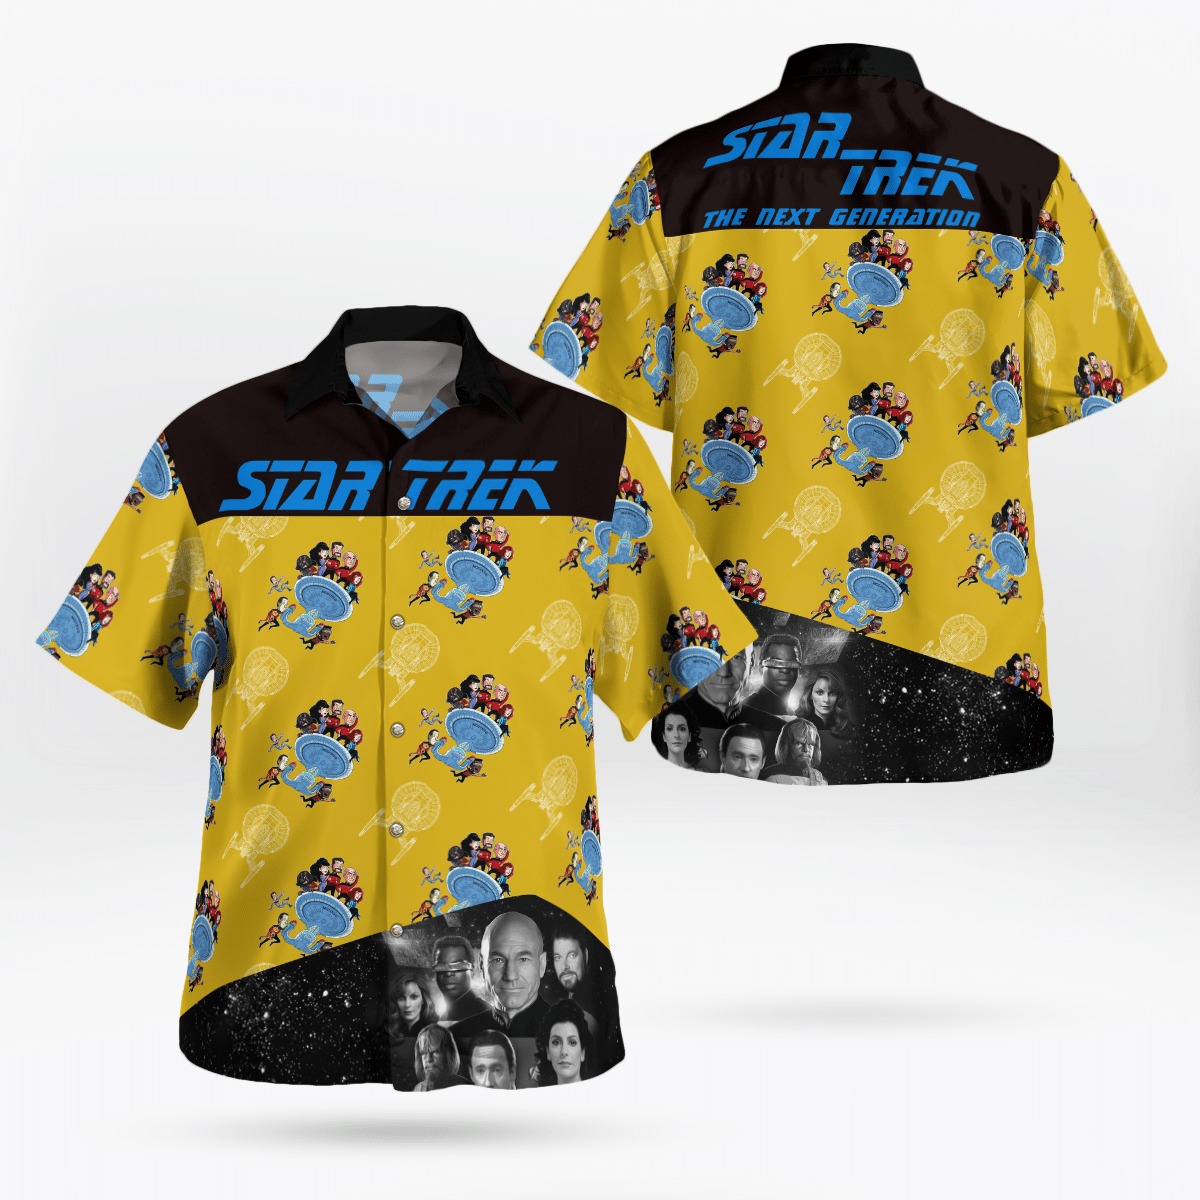 Star Trek operation hawaiian shirt 1